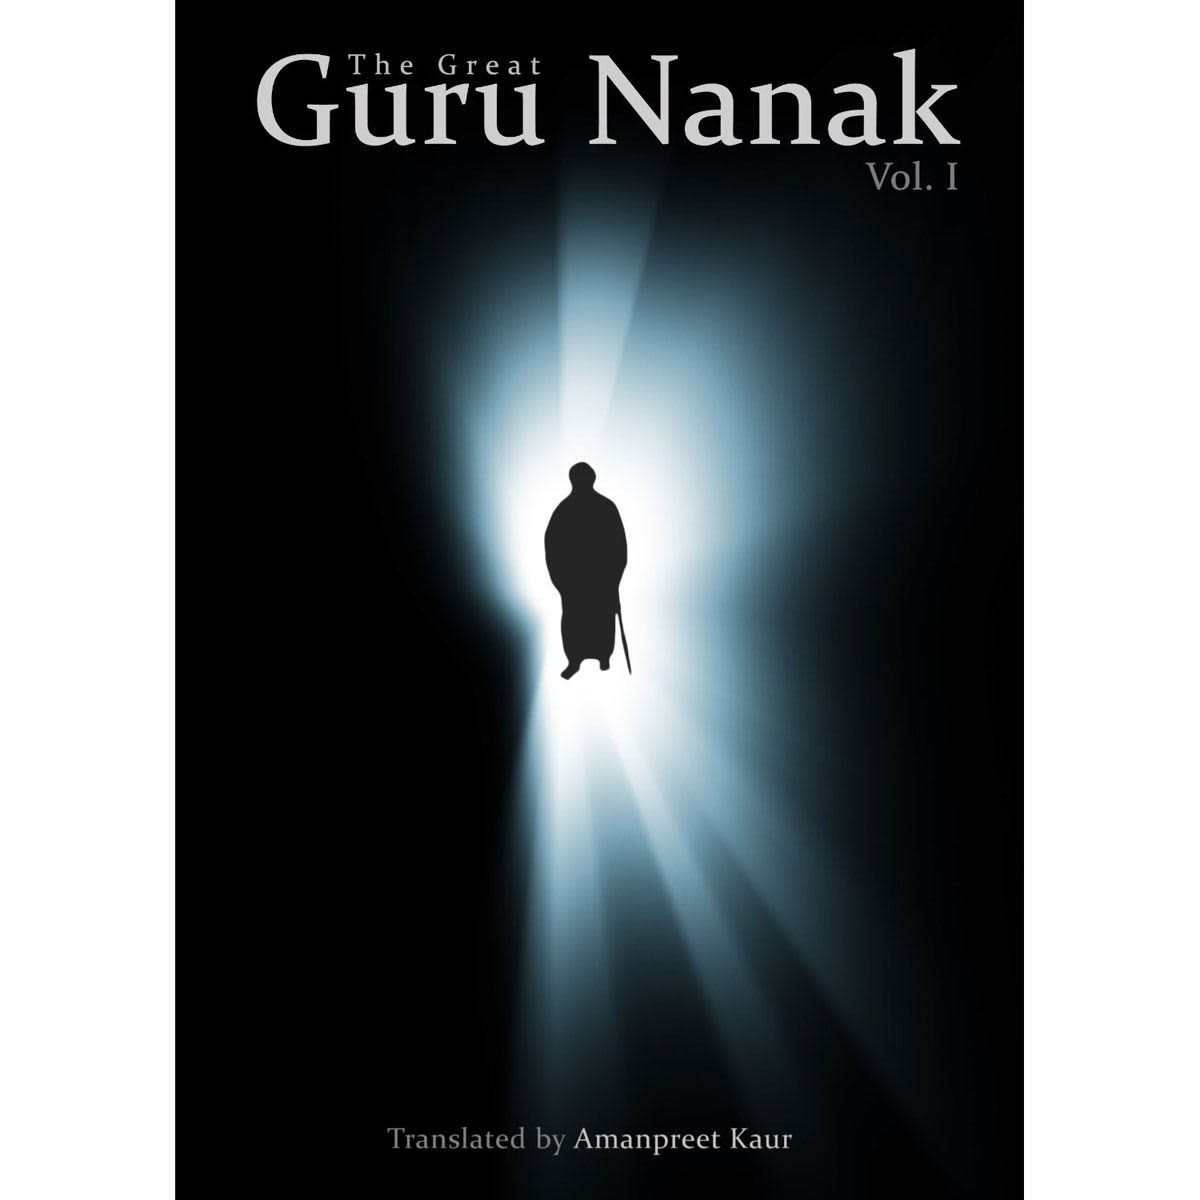 The Great Guru Nanak Volume 1